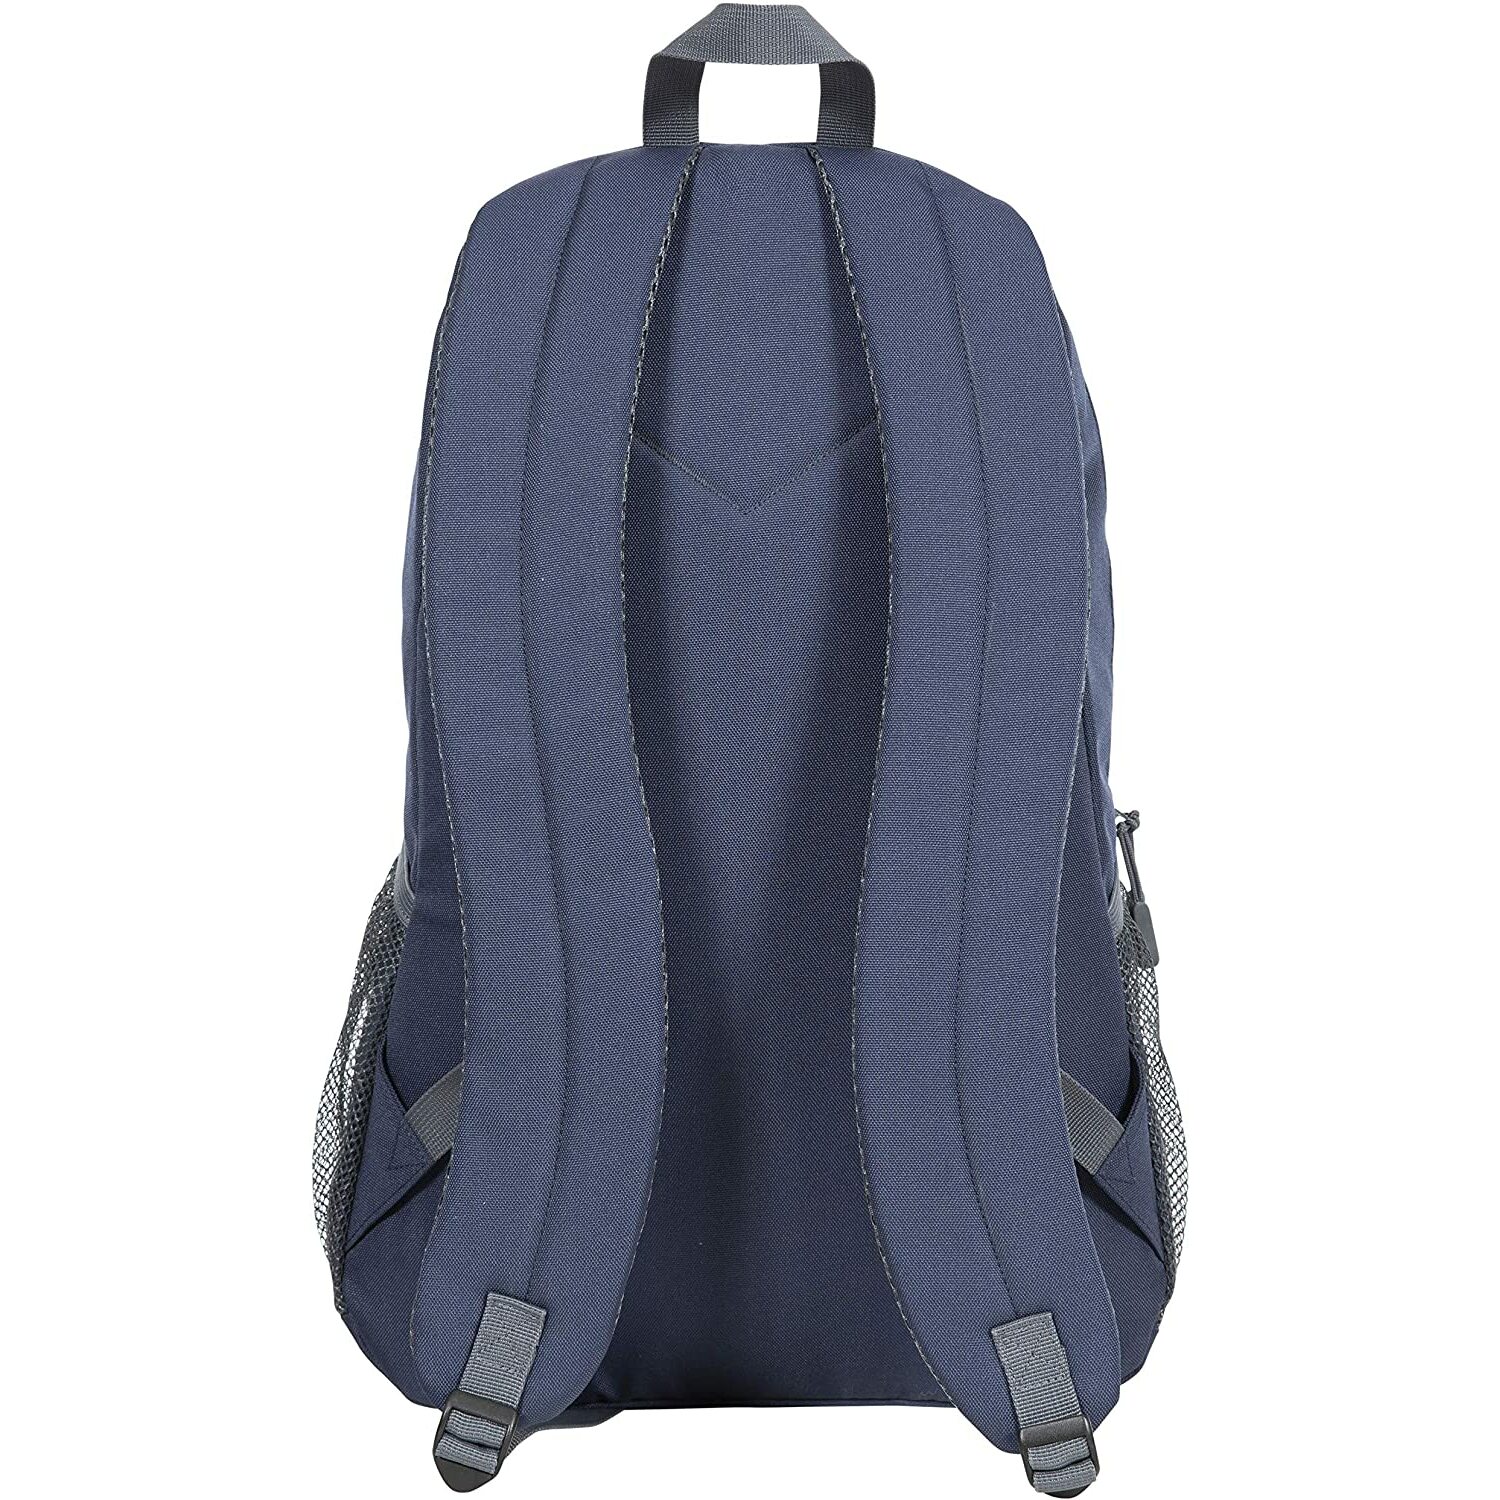 Trespass Bustle Backpack/ Rucksack, 25 Litres () Navy Blue | Falcon ...